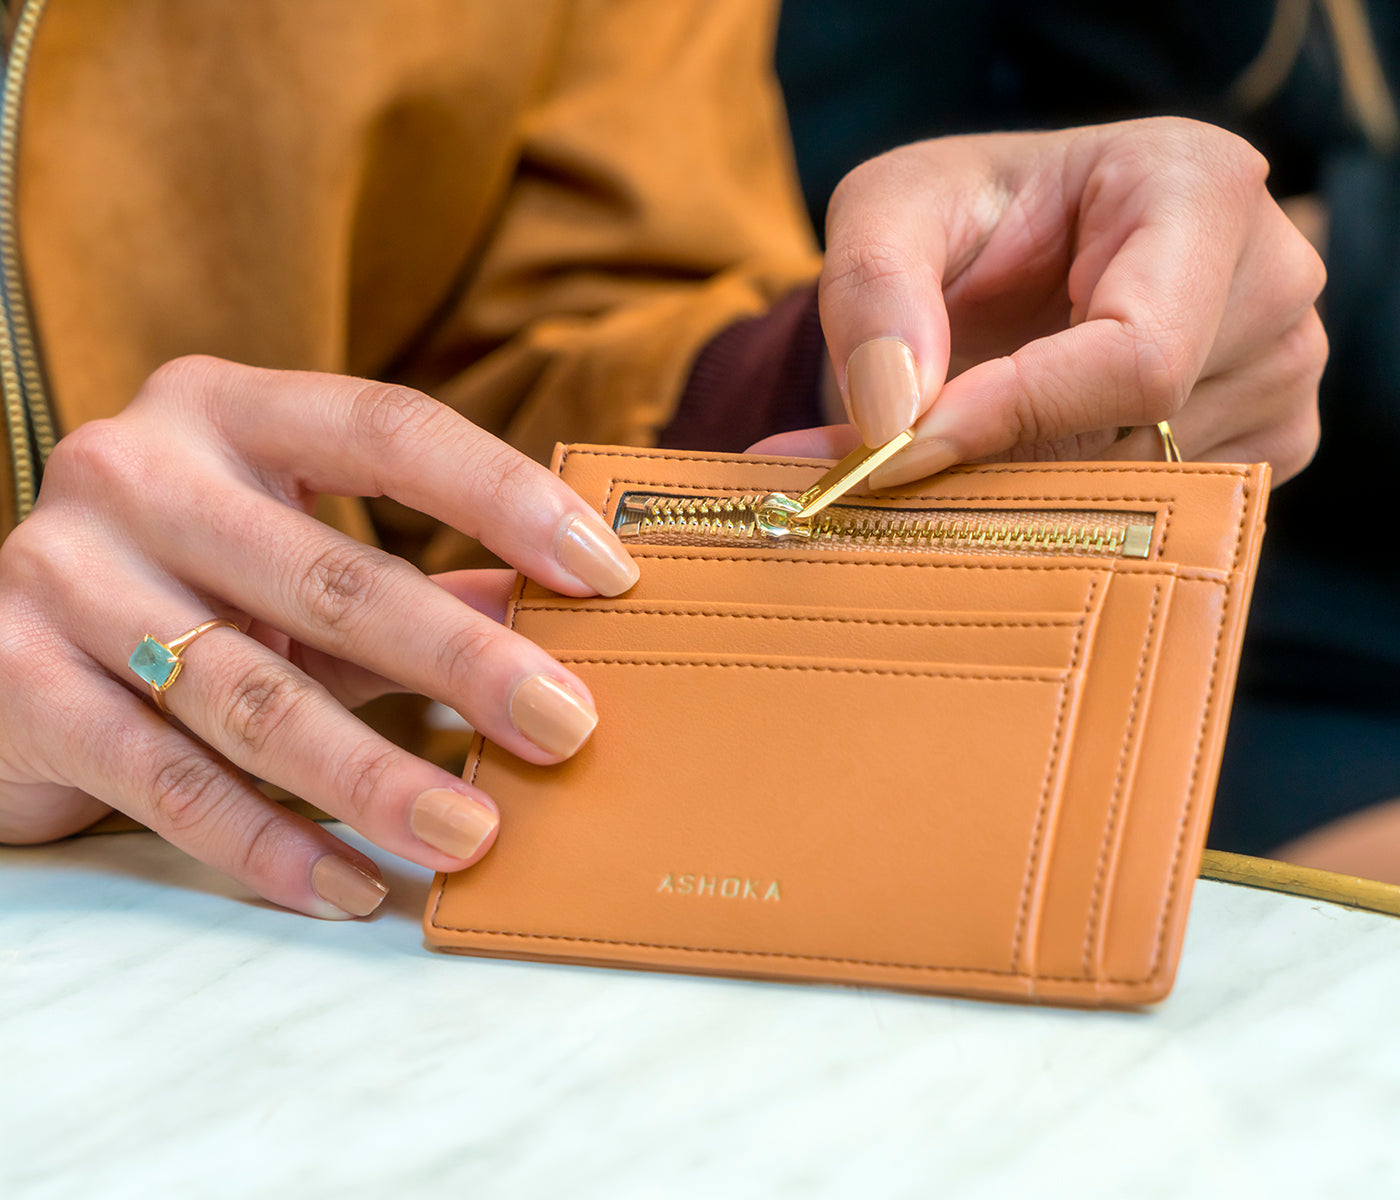 ROBART - Apple Airtag Wallet Homme Femme - Porte-cartes - Portefeuille -  Cuir carbone